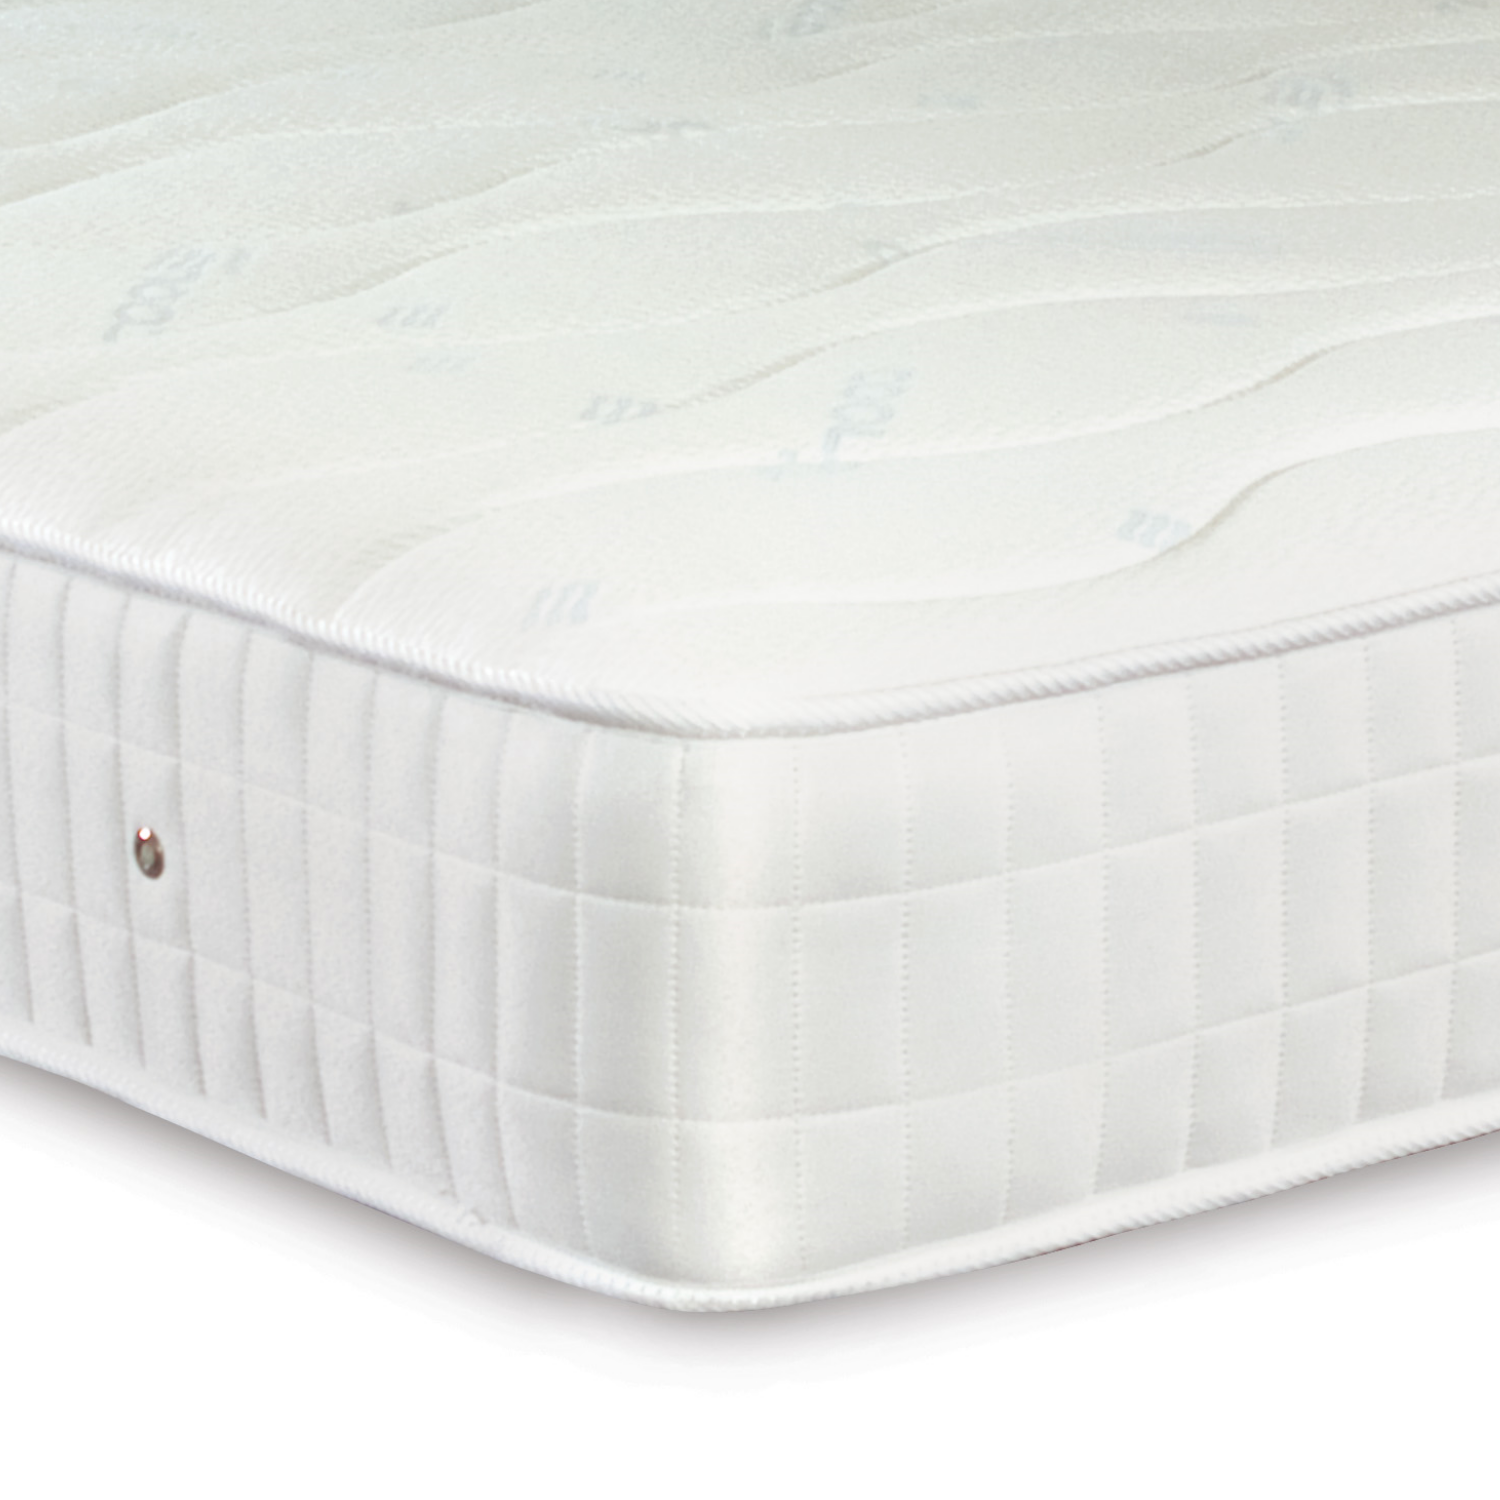 Photo of Sleepeezee cooler pinnacle 1000 pocket sprung mattress with gel top - single